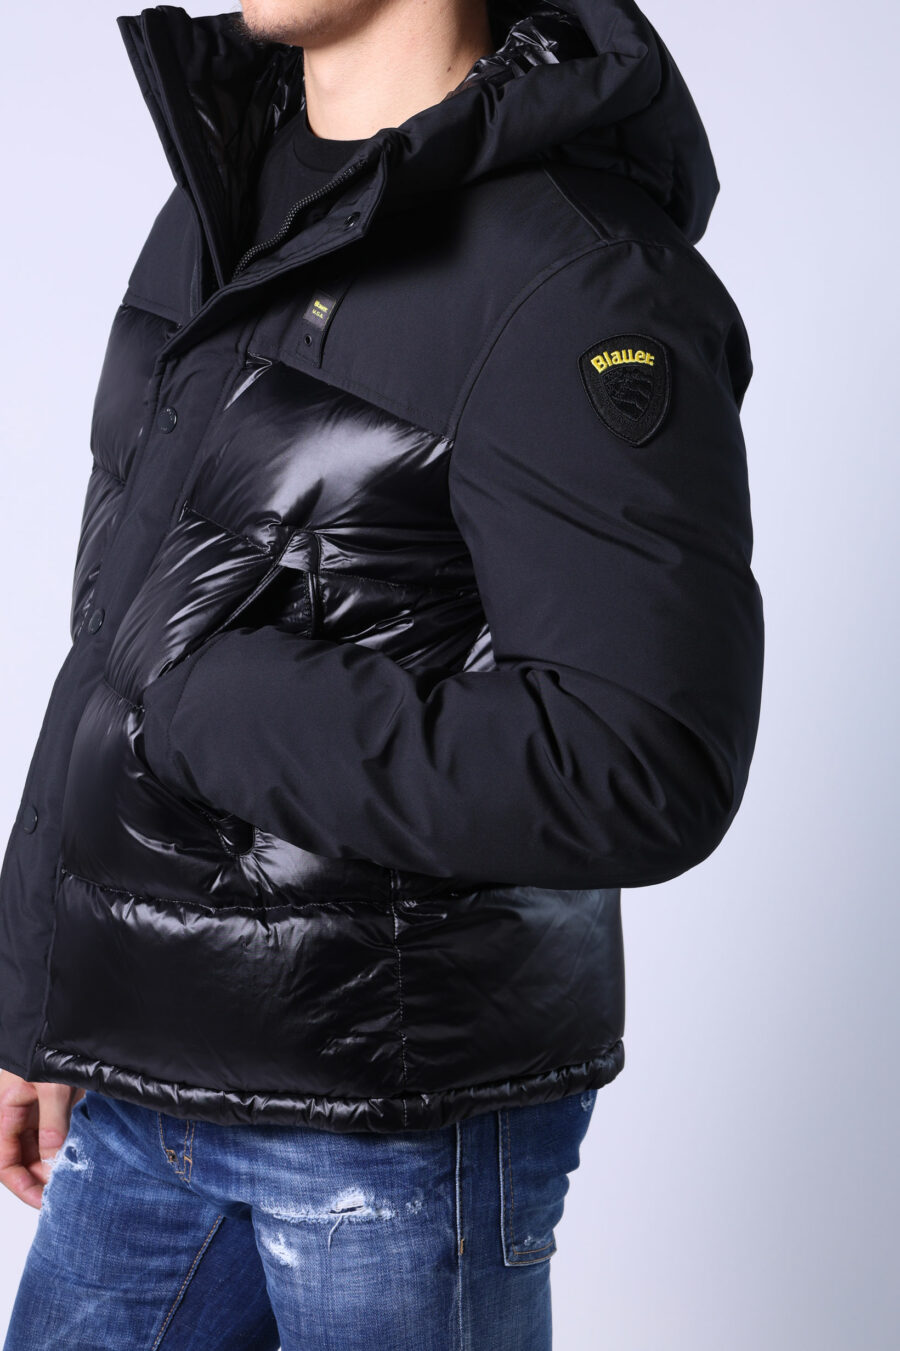 Black mix hooded jacket with logo patch - Untitled Catalog 05539